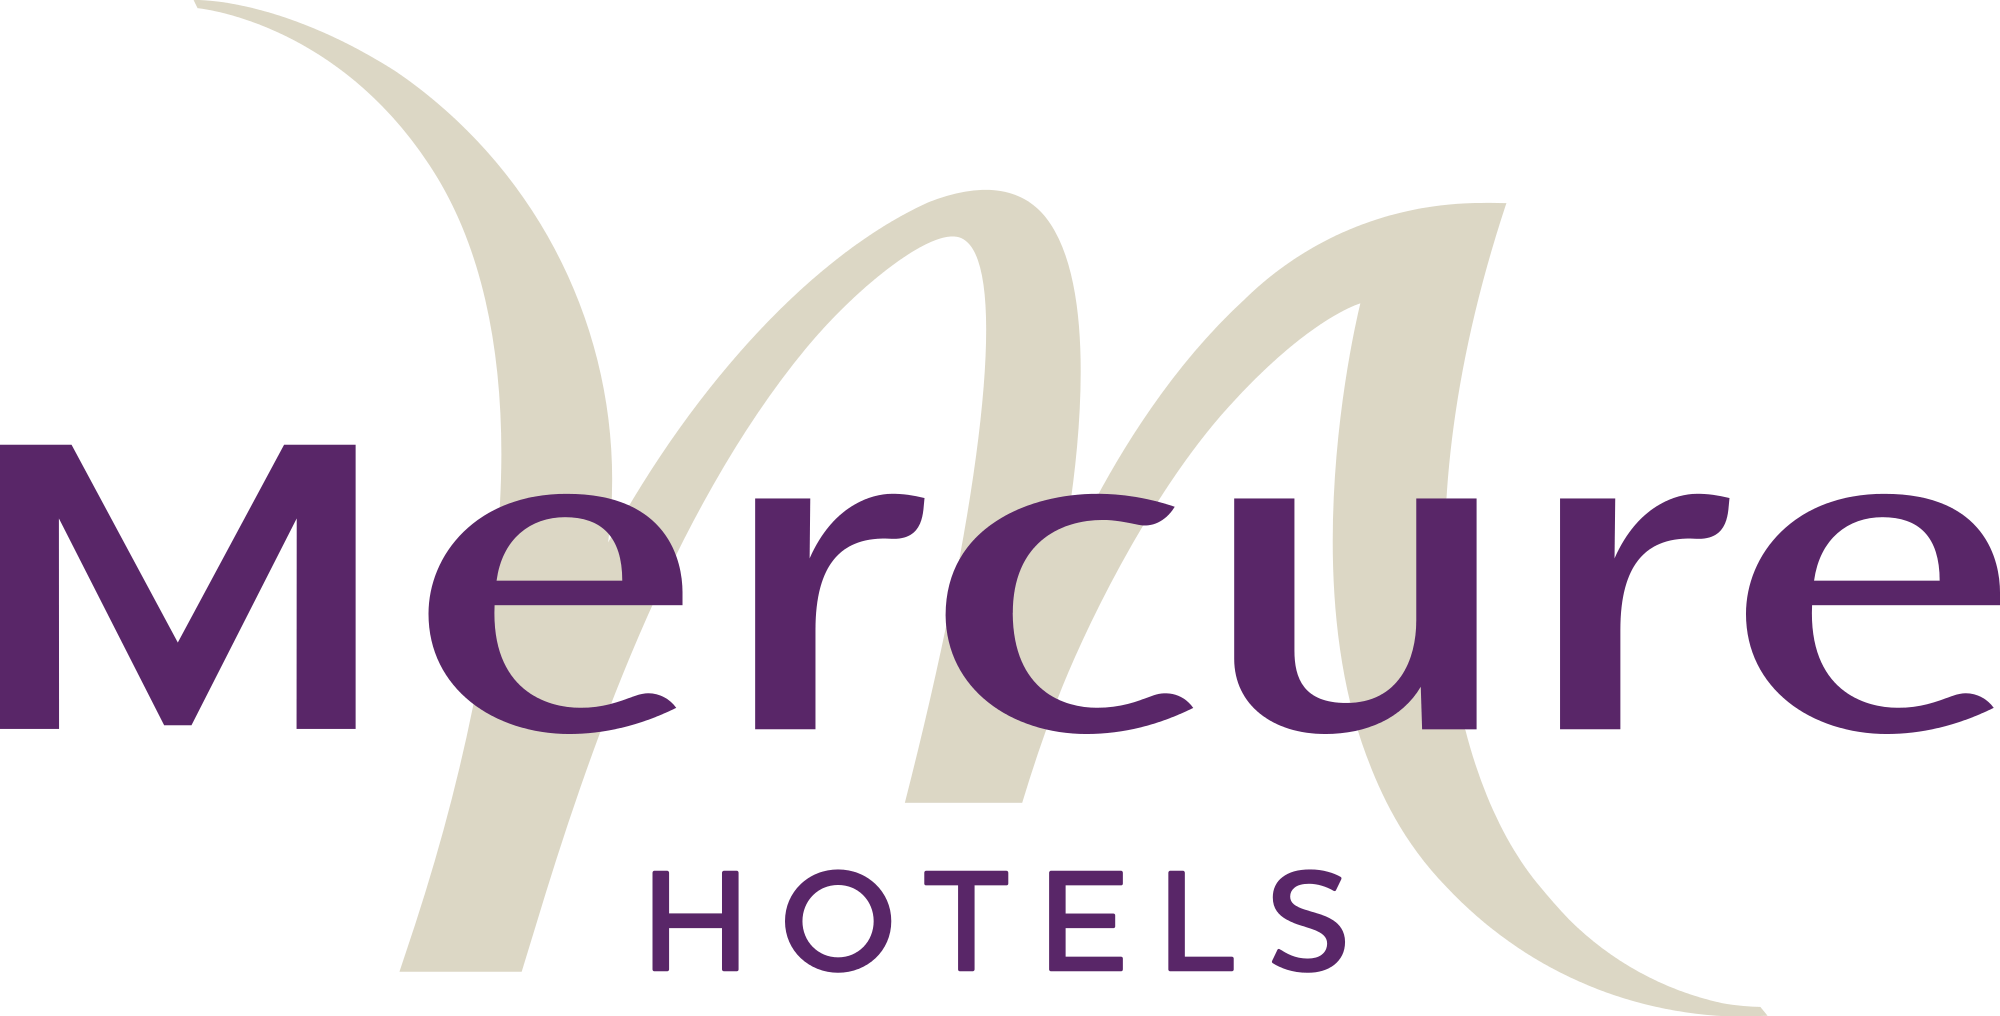 Hotels Logo - Mercure Hotels Logo 2013.svg